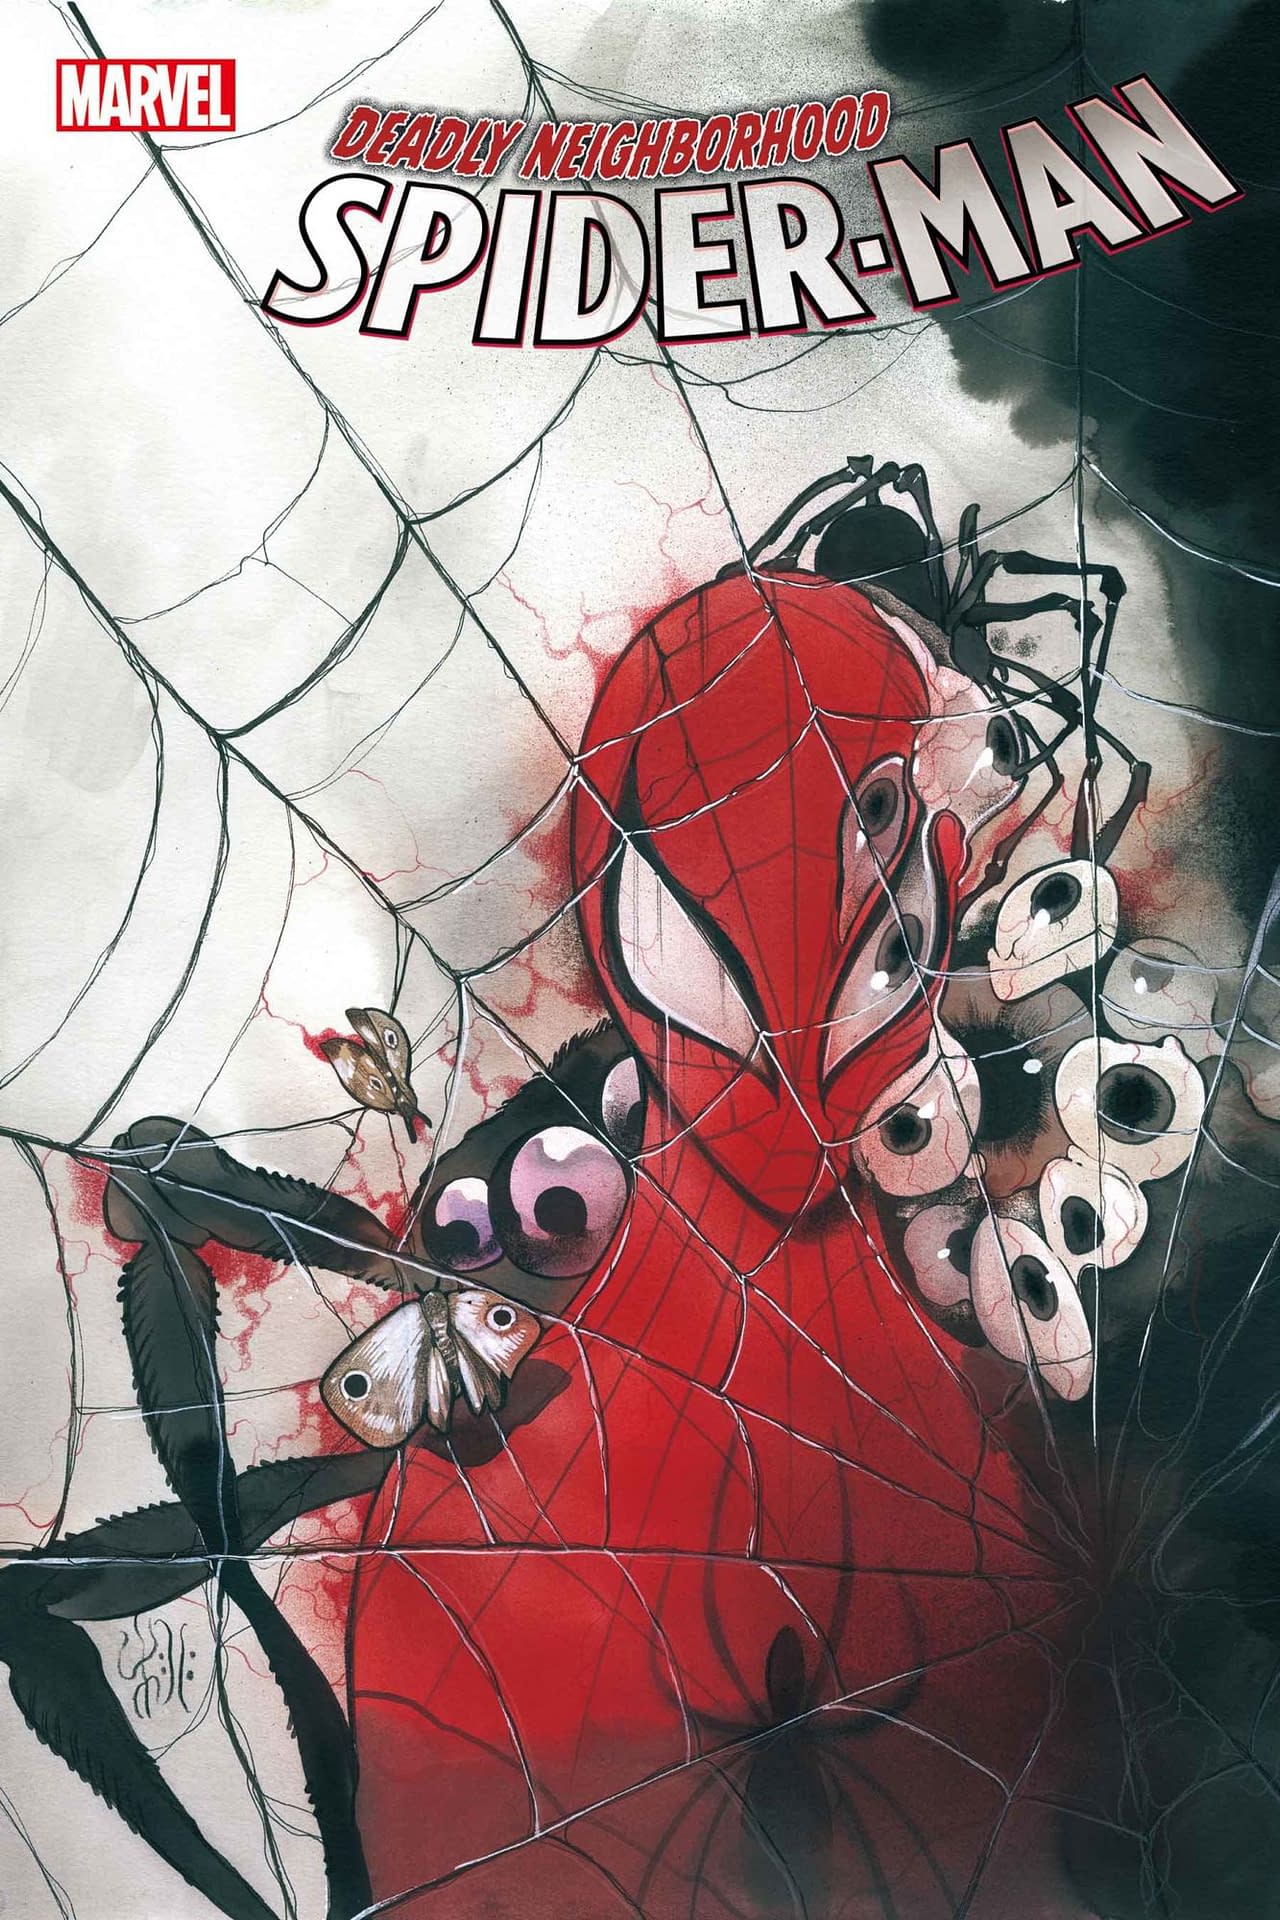 Marvel Comics Delays Taboo's Deadly Neighborhood Spider-Man Already